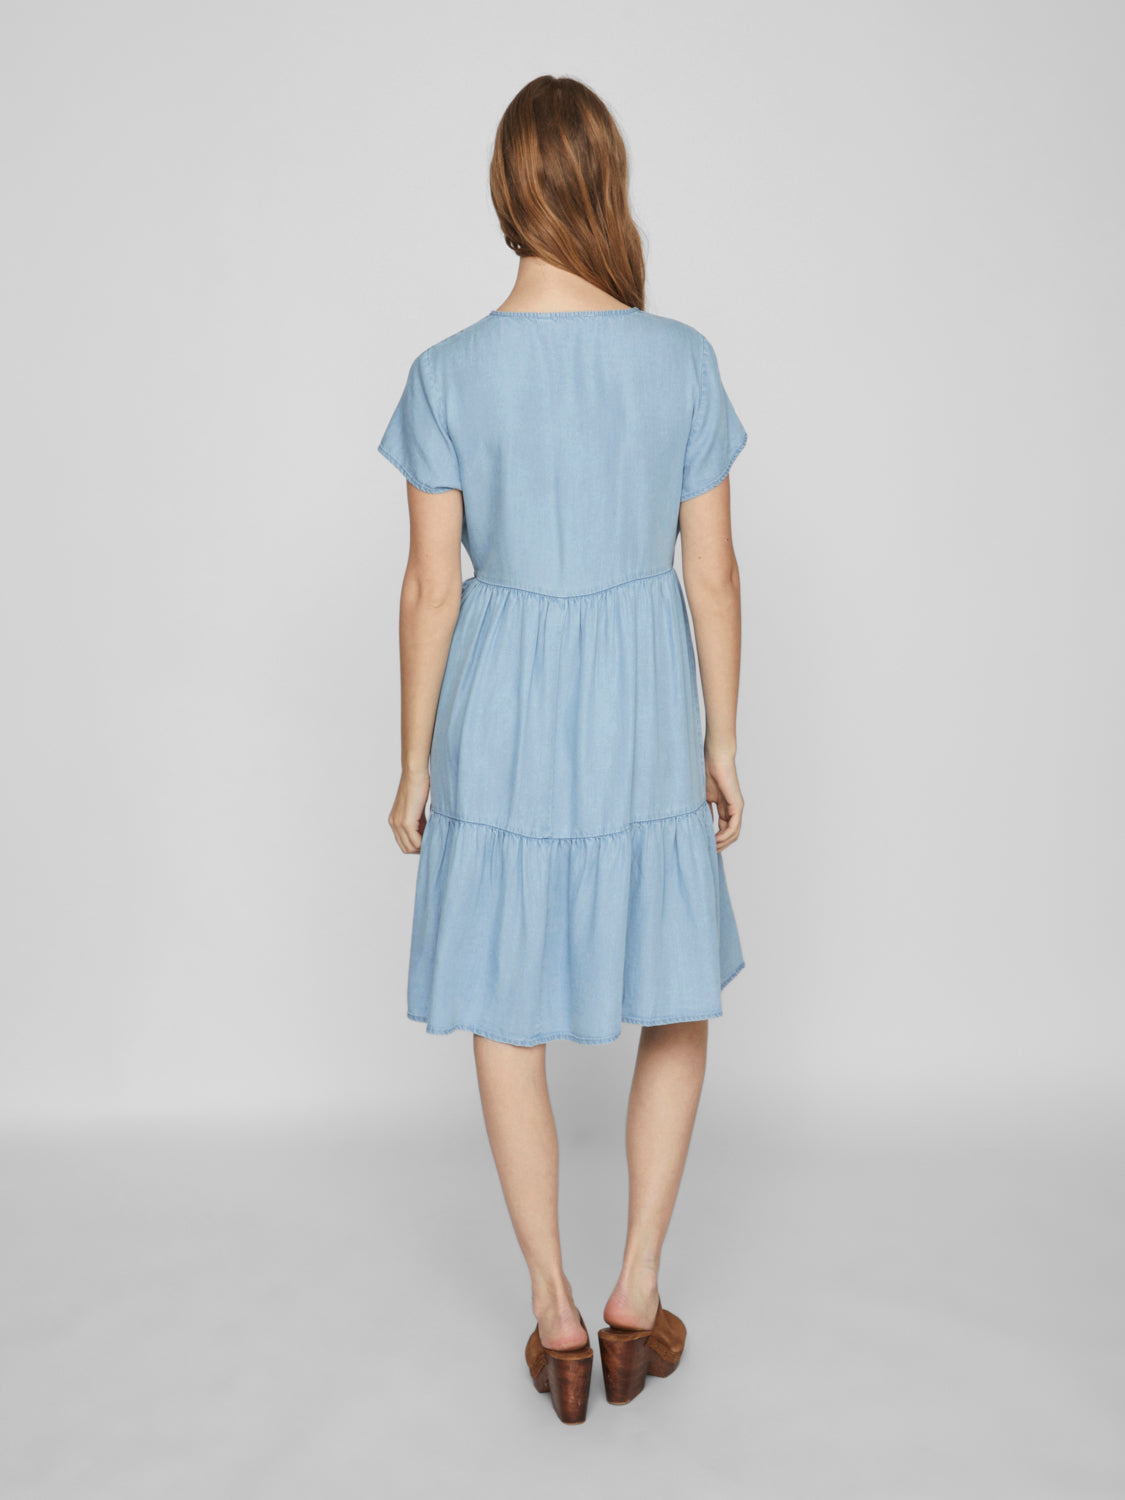 VIGIVANI Dress - Light Blue Denim